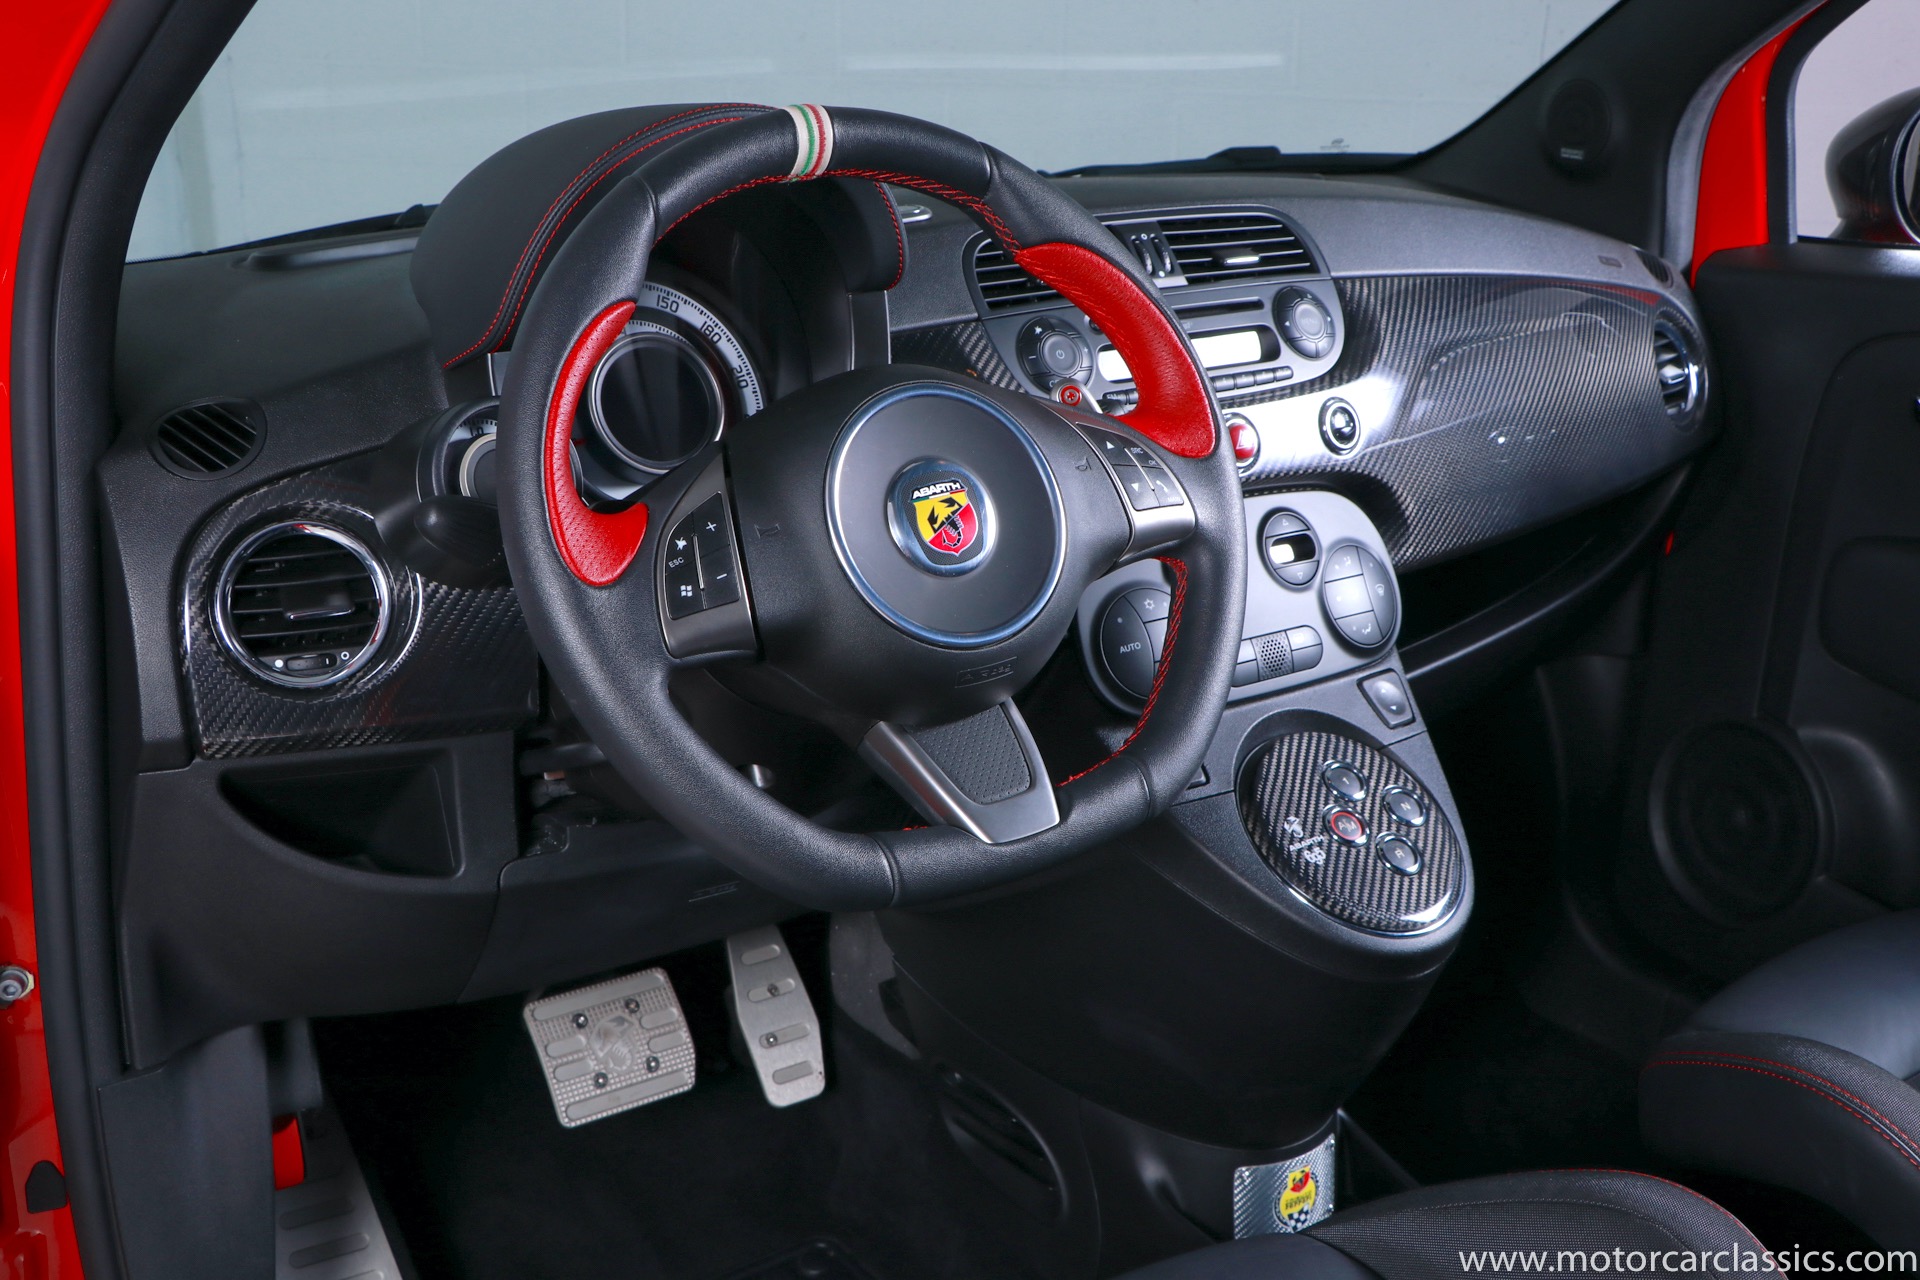 2017 Fiat Abarth 695 Tributo Ferrari